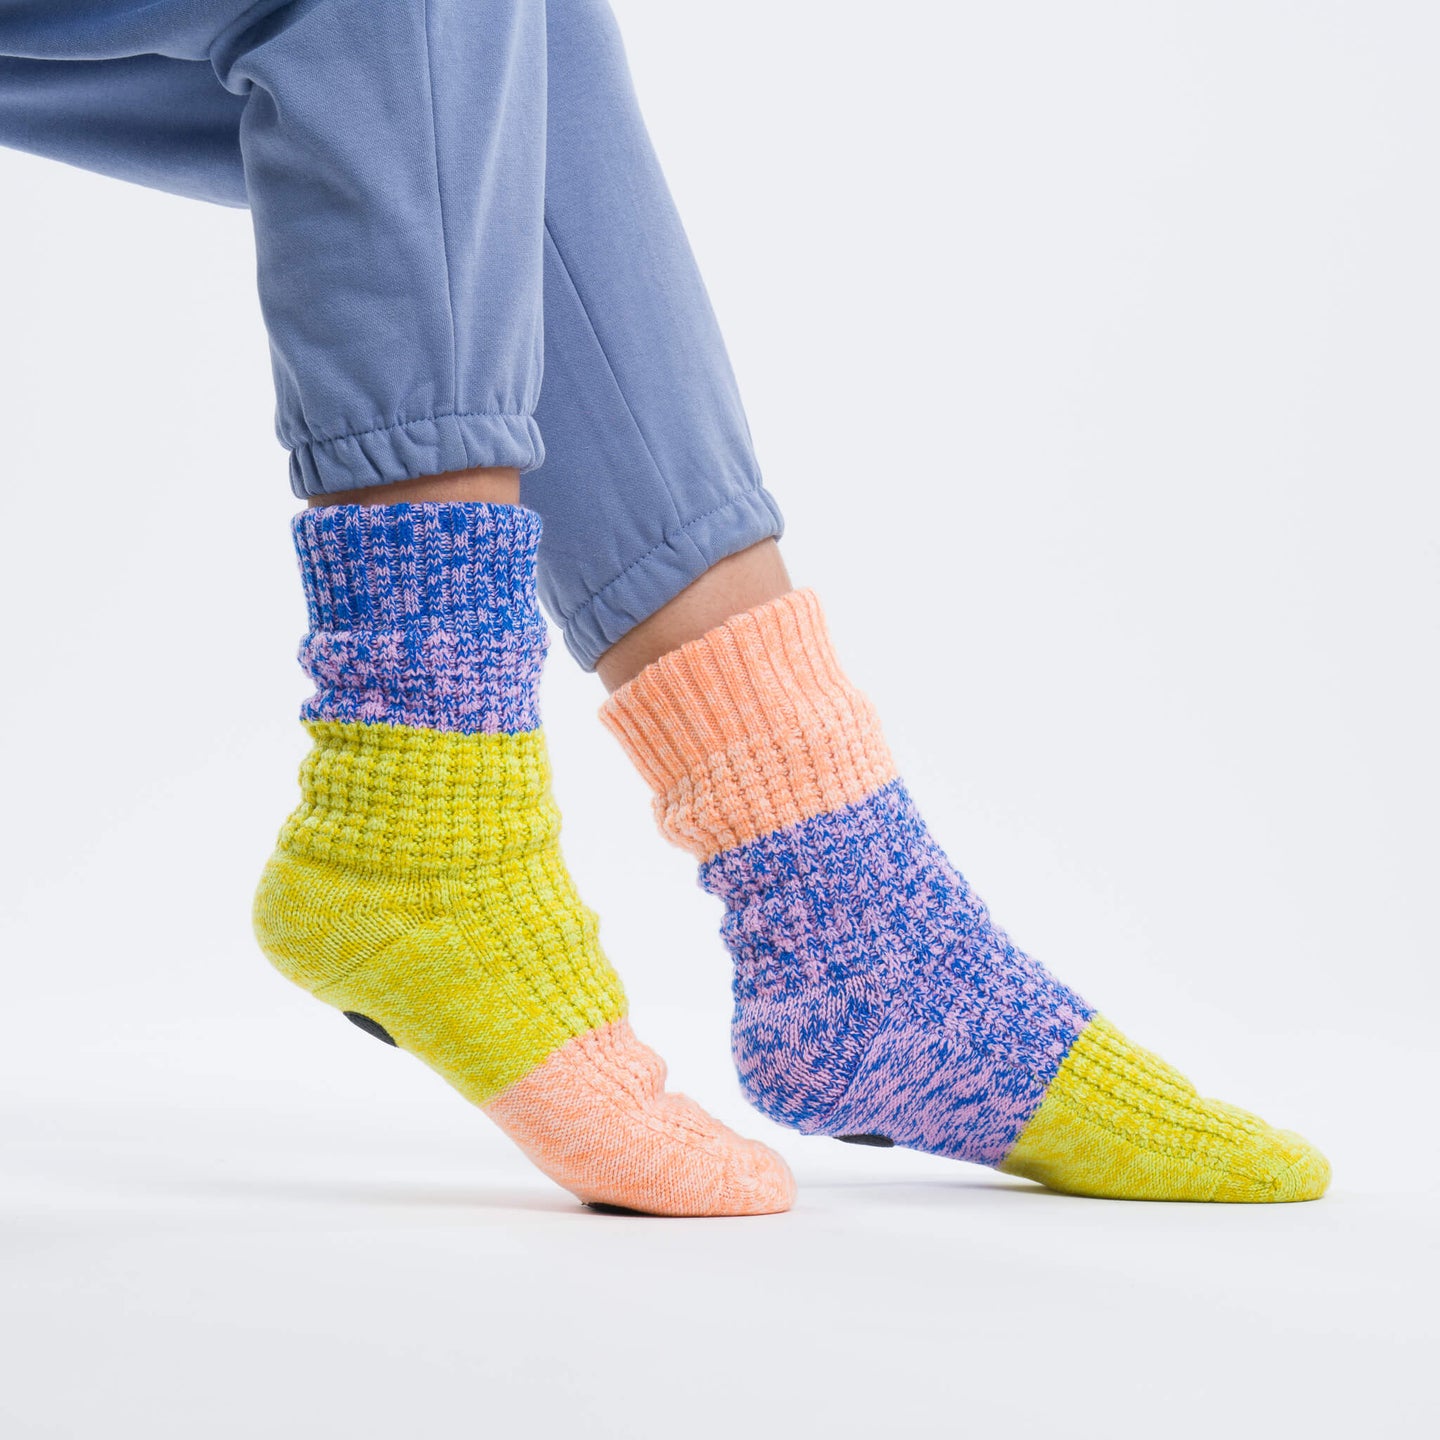 Trio Waffle House Socks Unisex Colorful Cozy Thick Fleece Knit Socks